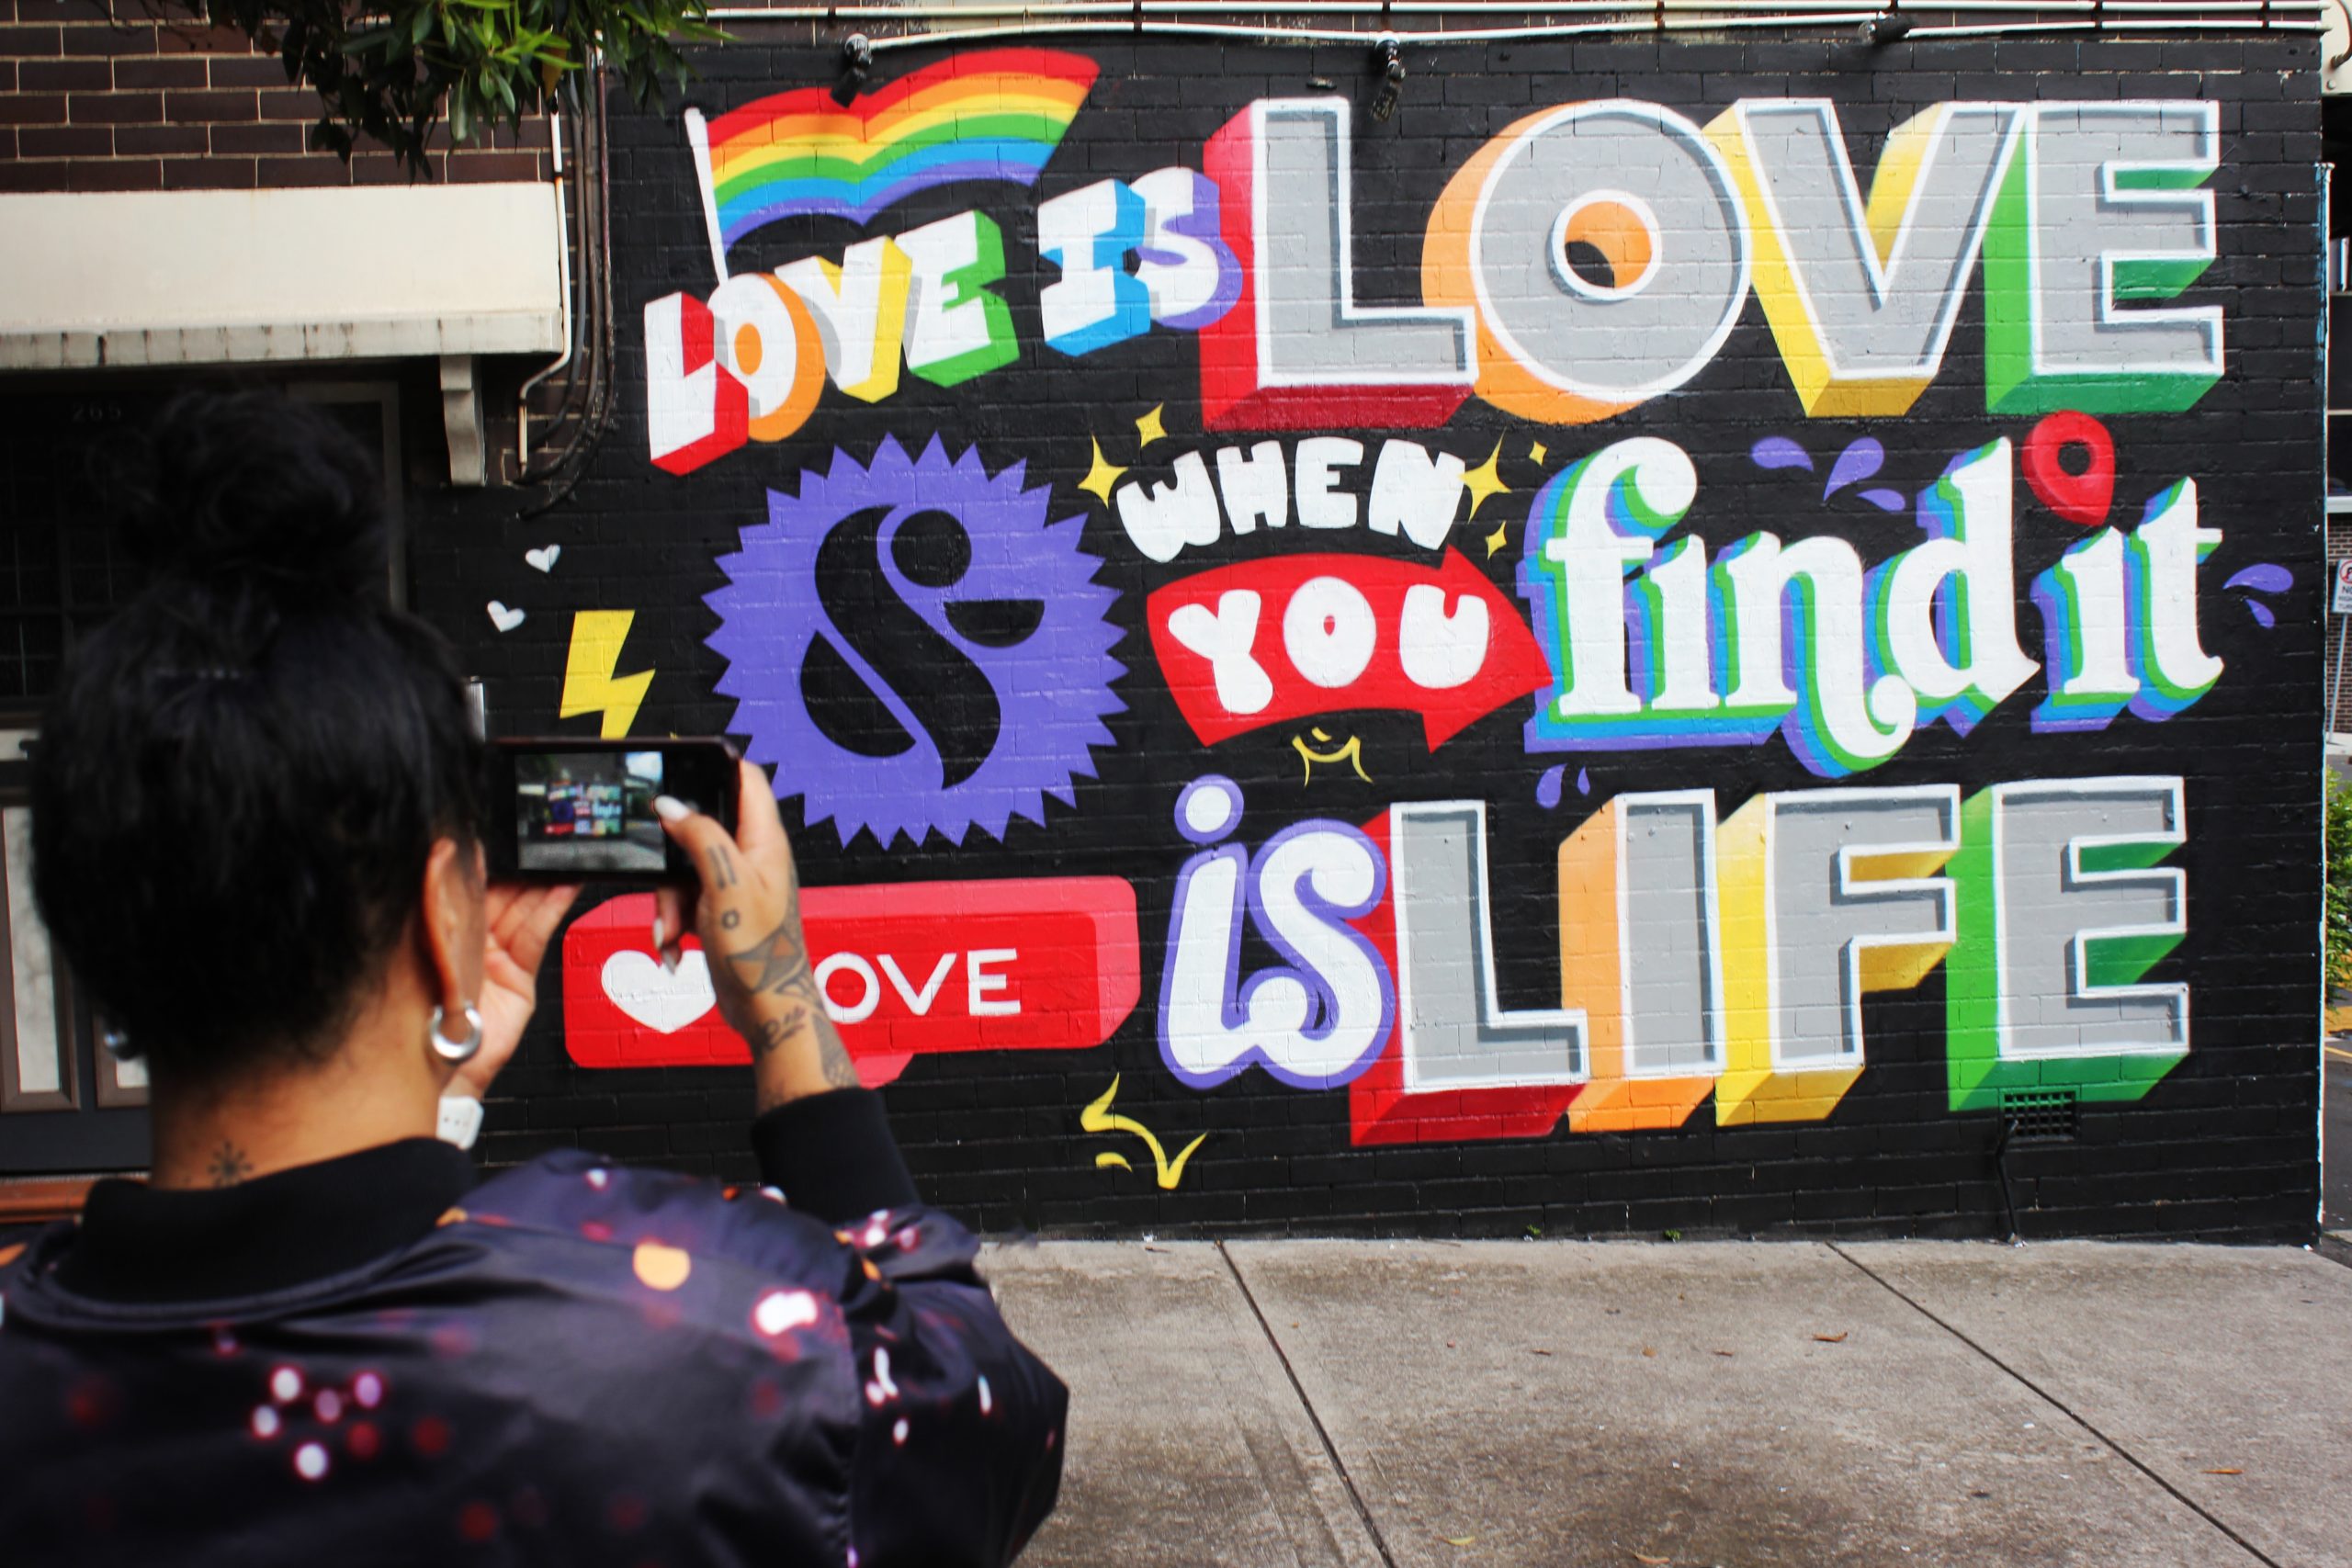 Big Love spreads across Sydney to celebrate Mardi Gras.